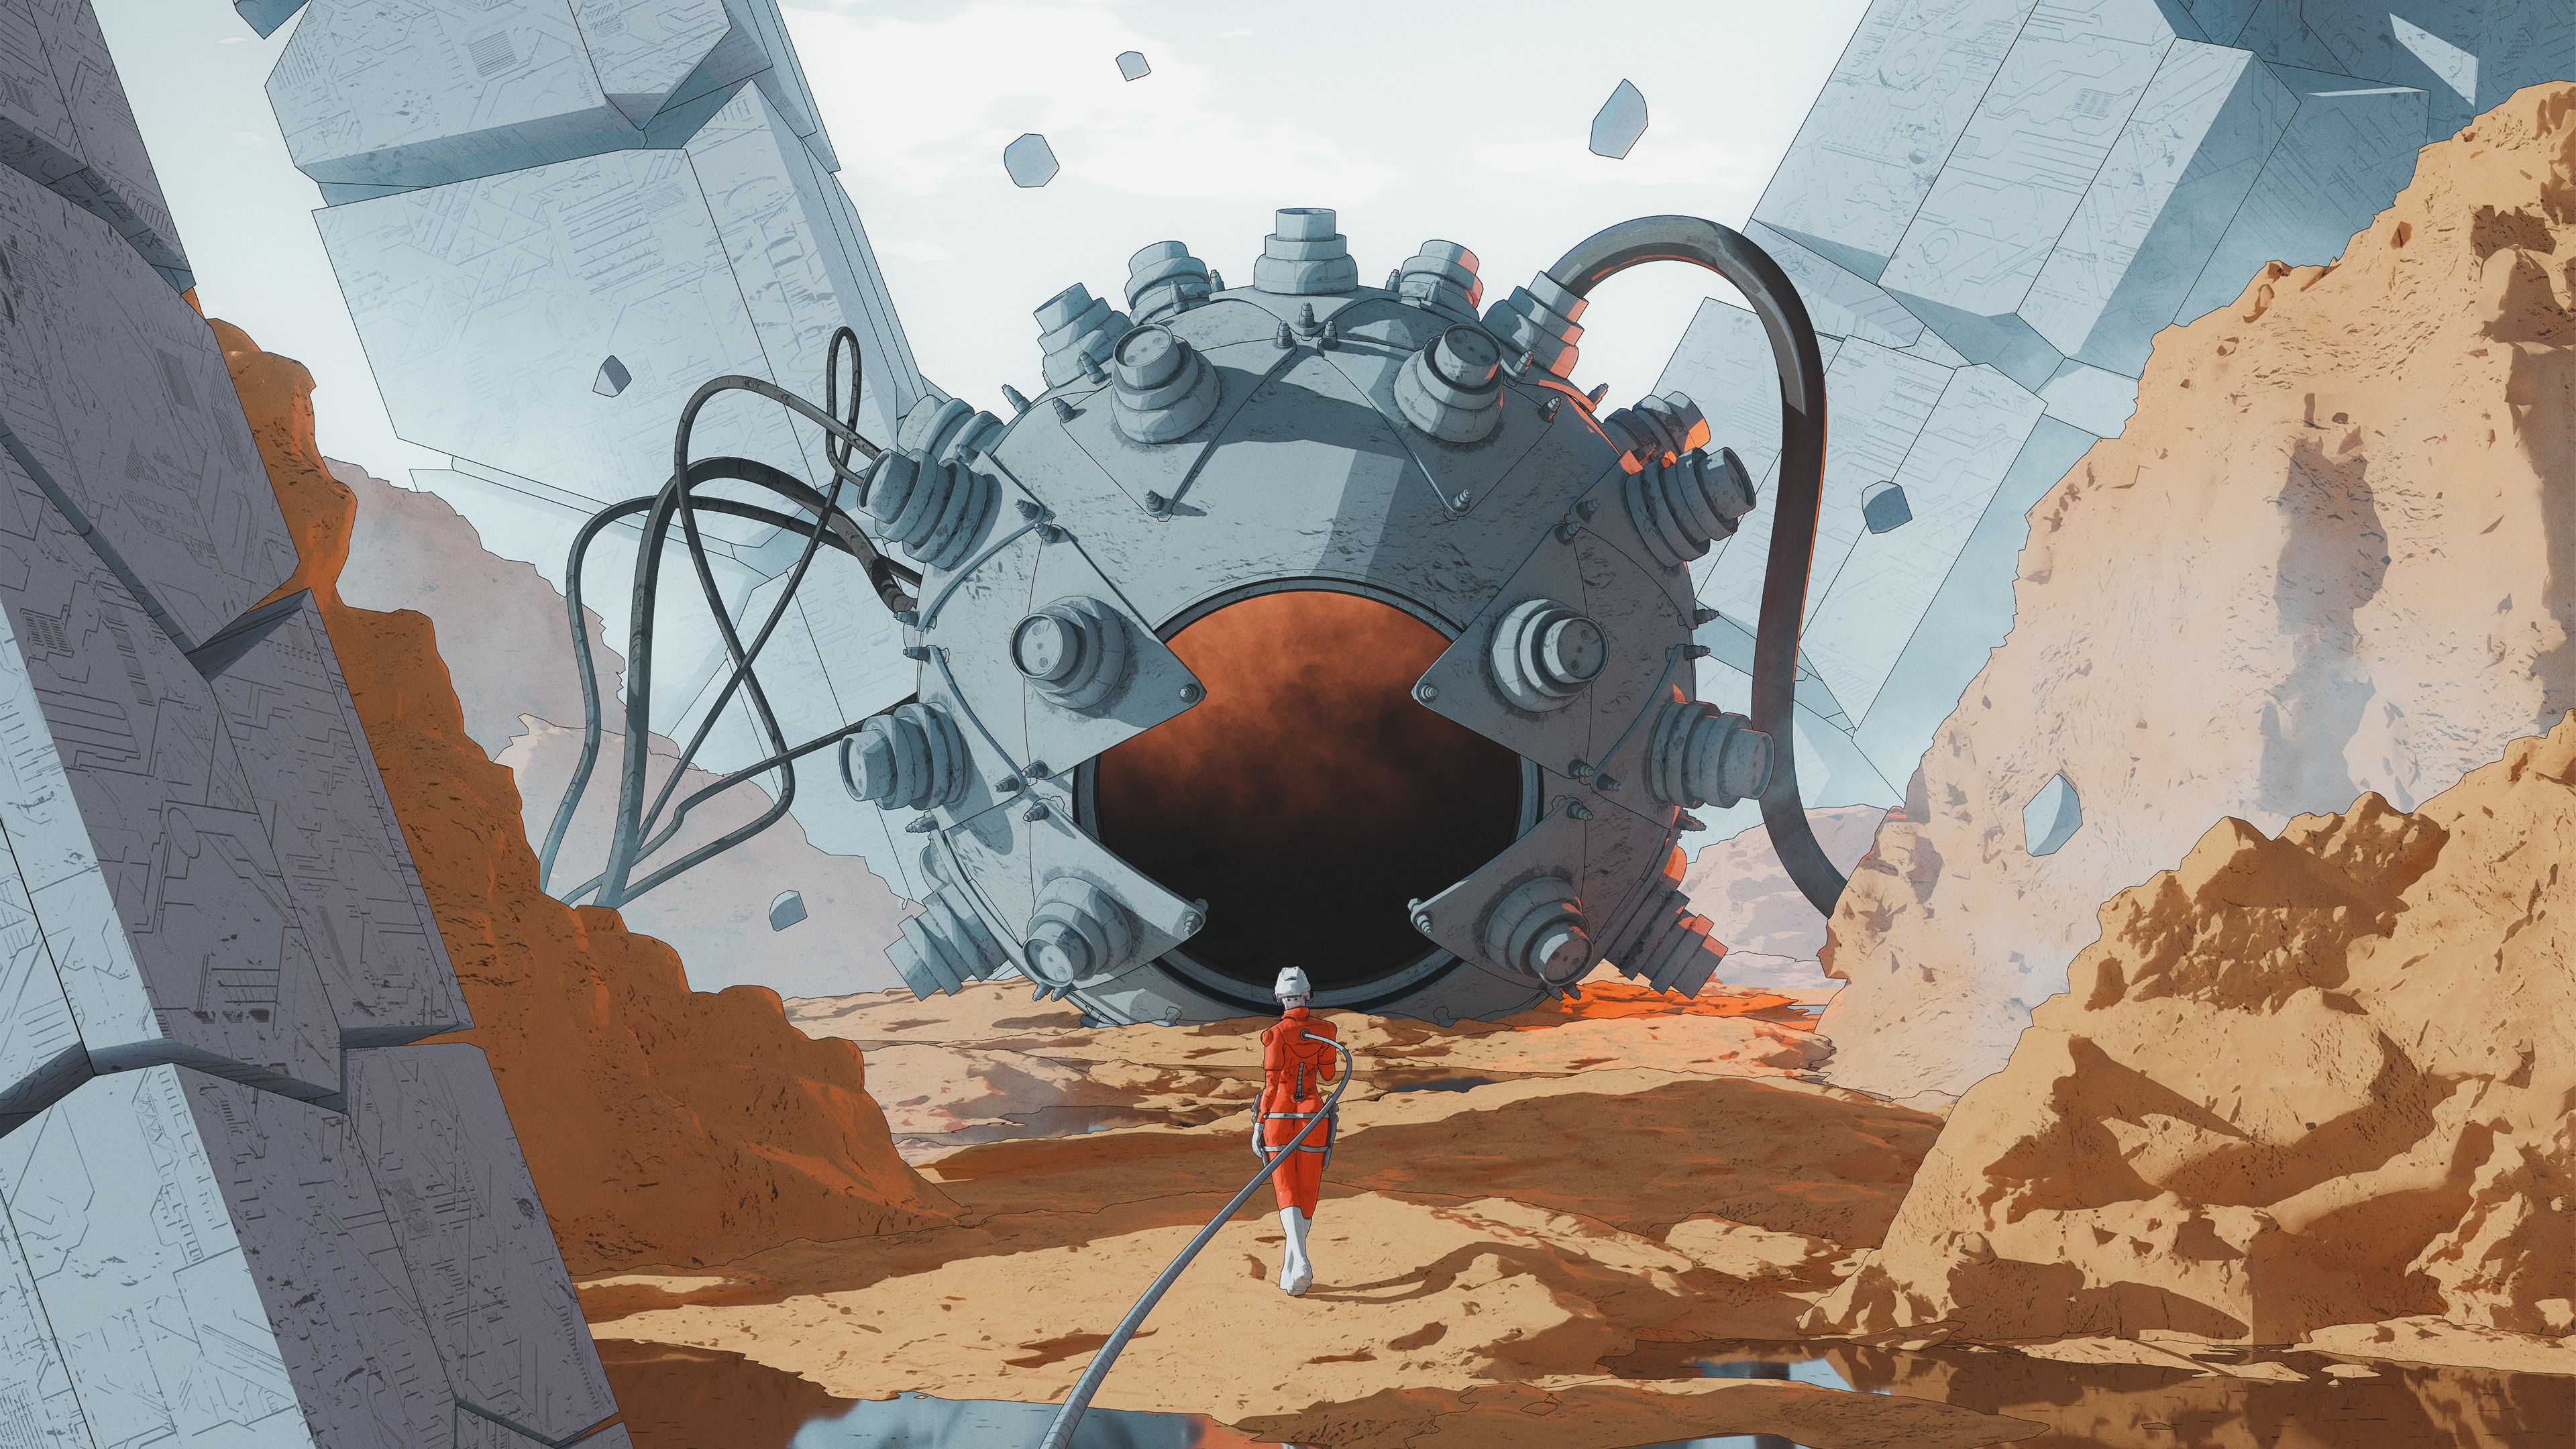 General 3840x2160 digital art artwork illustration sand desert science fiction spacesuit astronaut environment